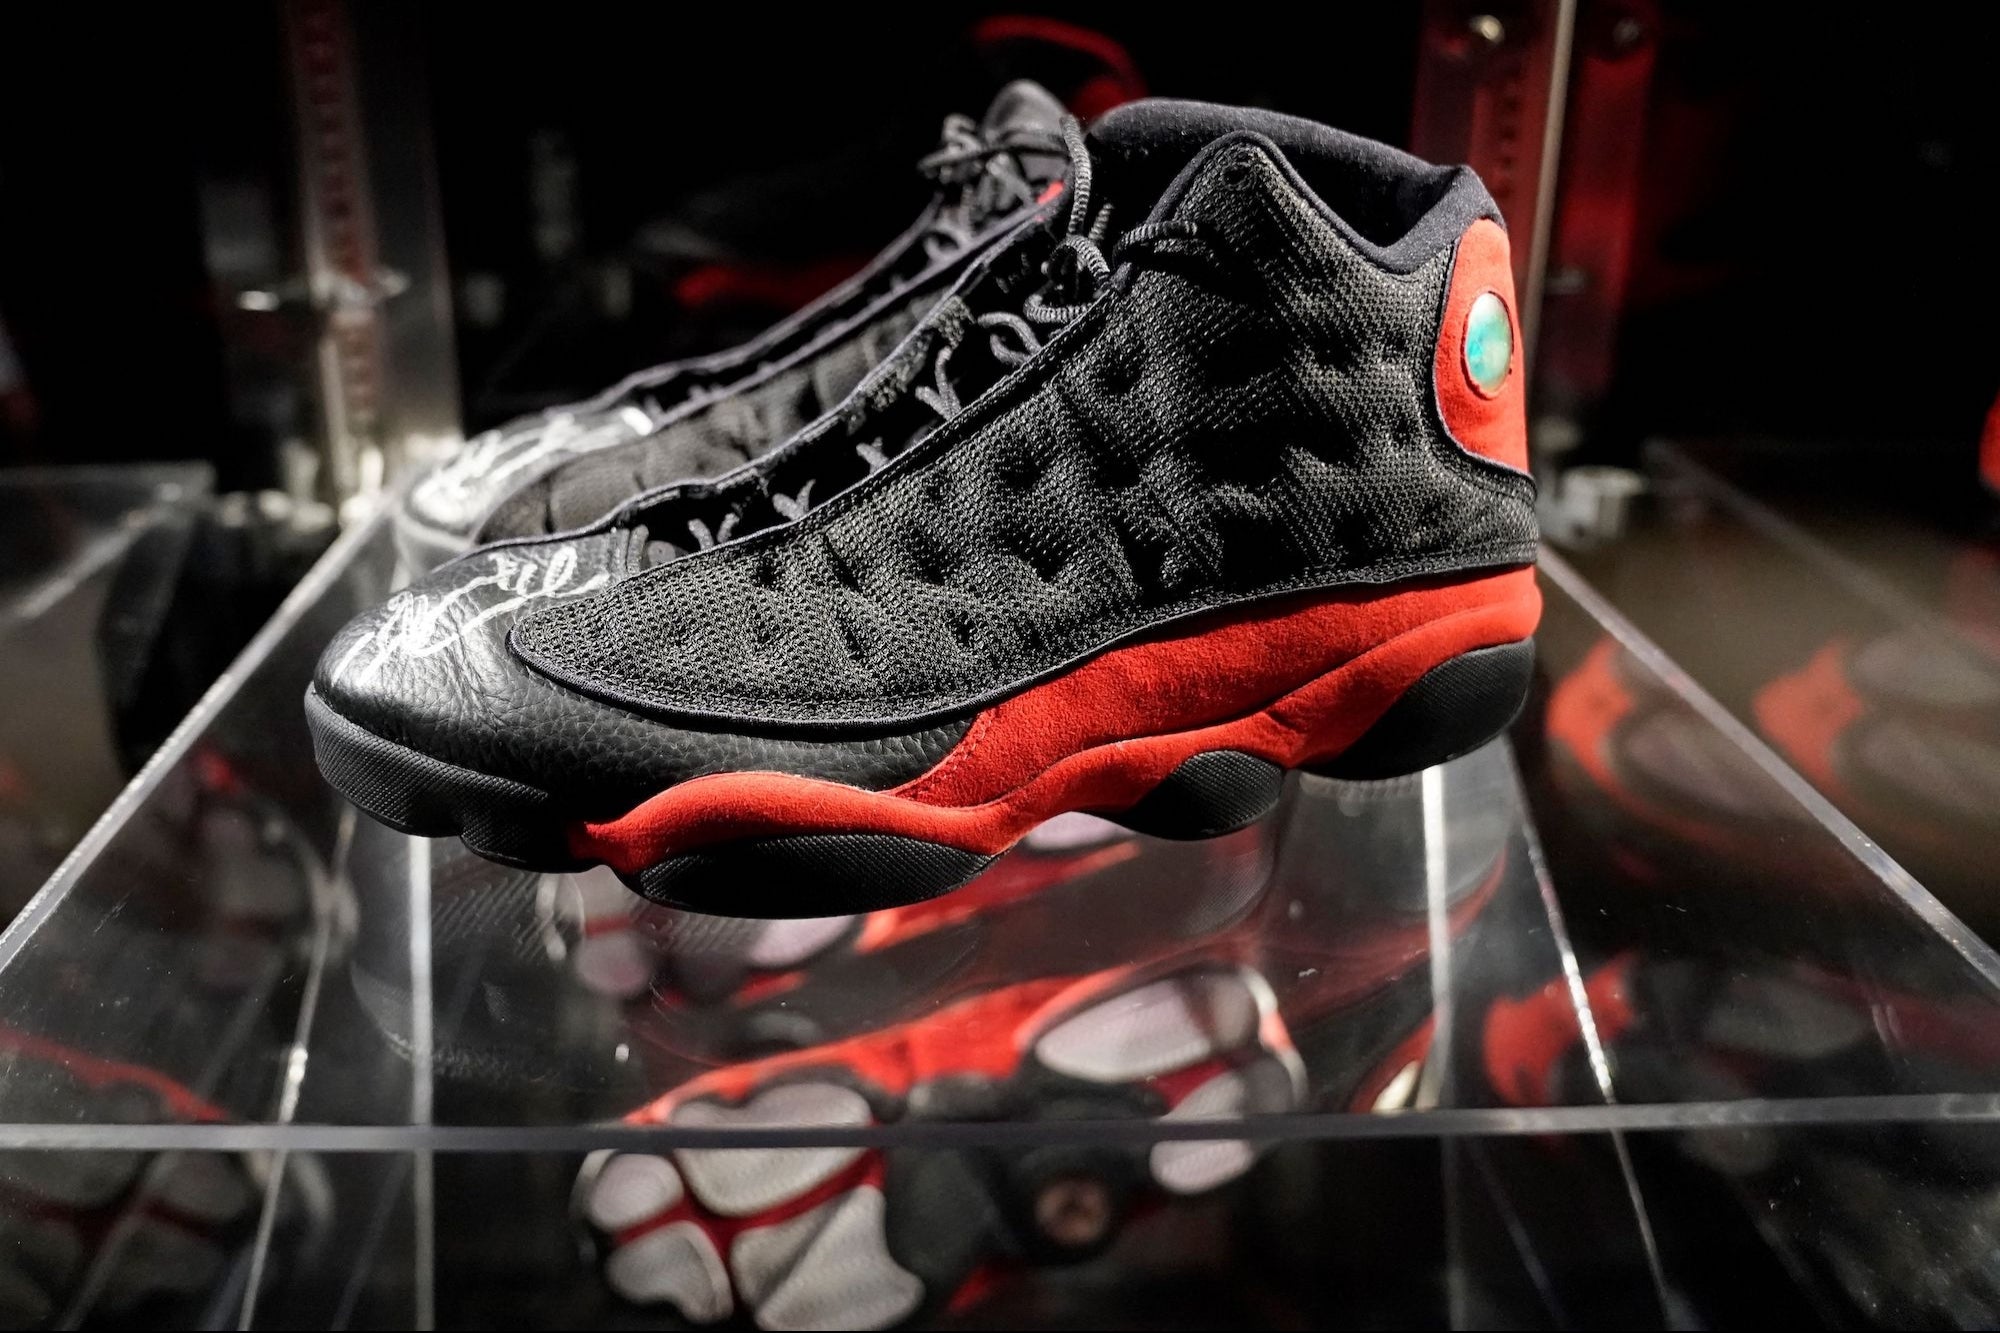 Michael Jordan’s Game Winning Shoes Sells for $2.2 Million